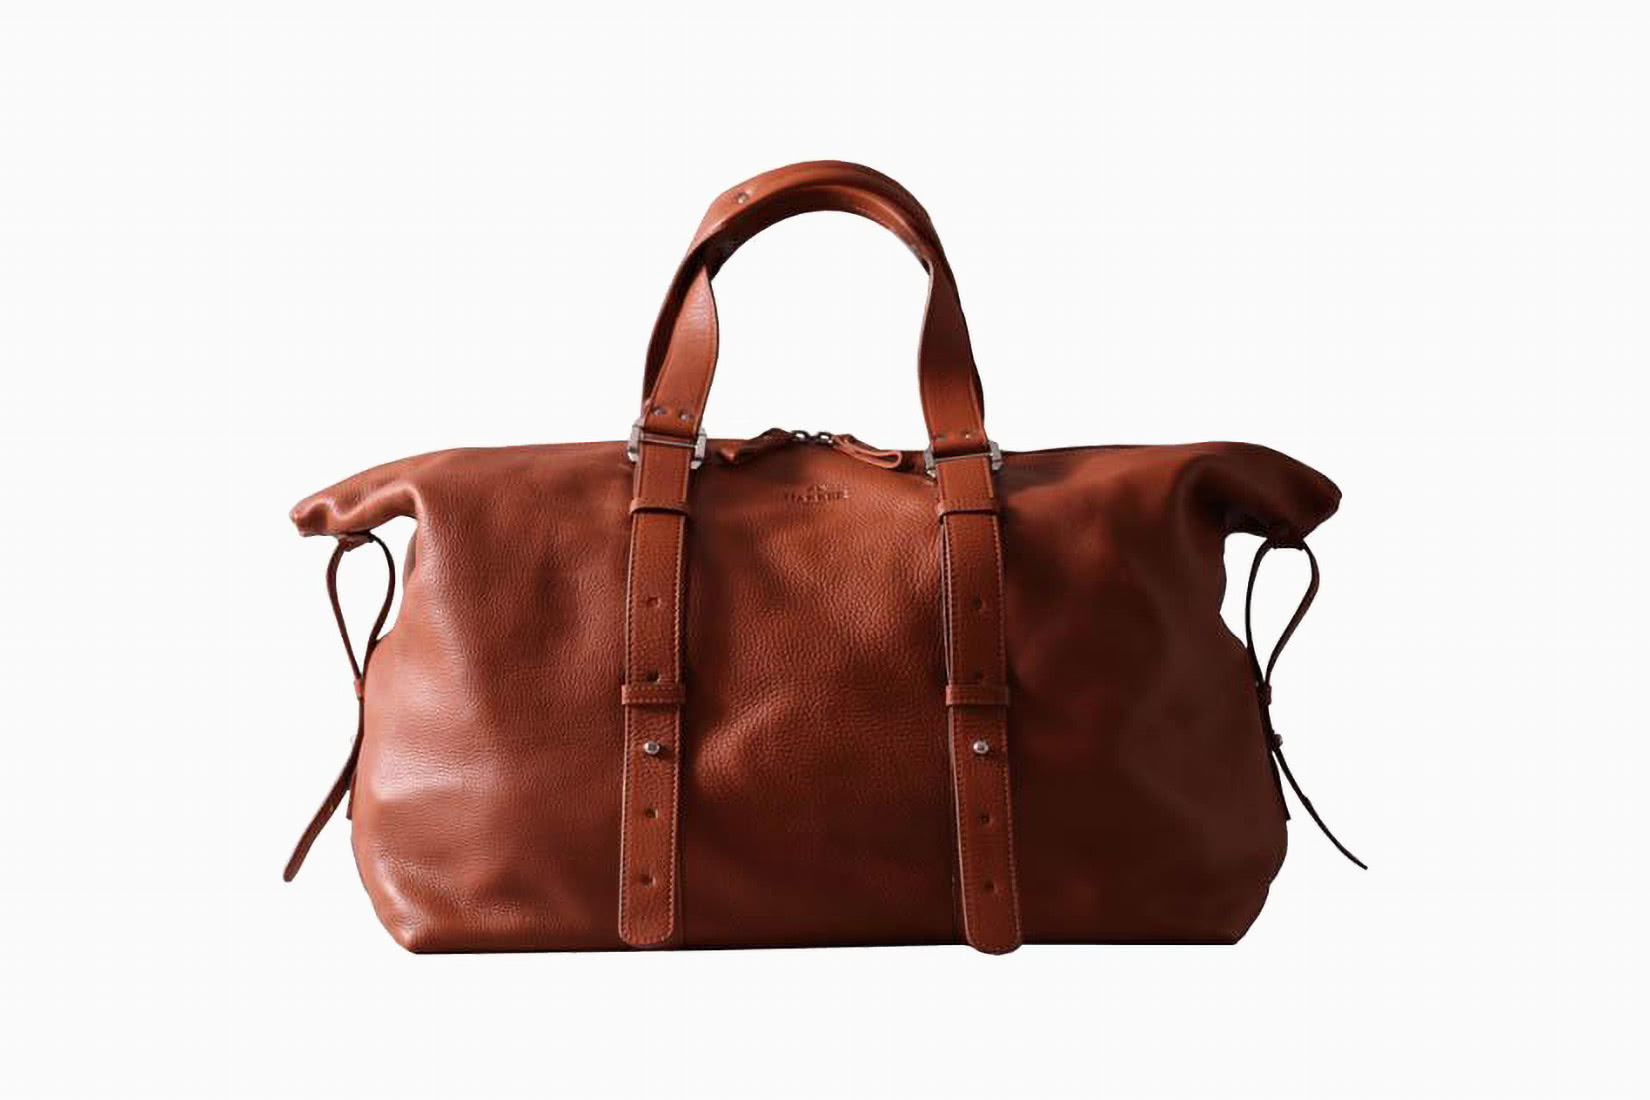 EASY BIG Men Sports Duffels for Gym Travel Bags Top PU Leather Handbag Totes 